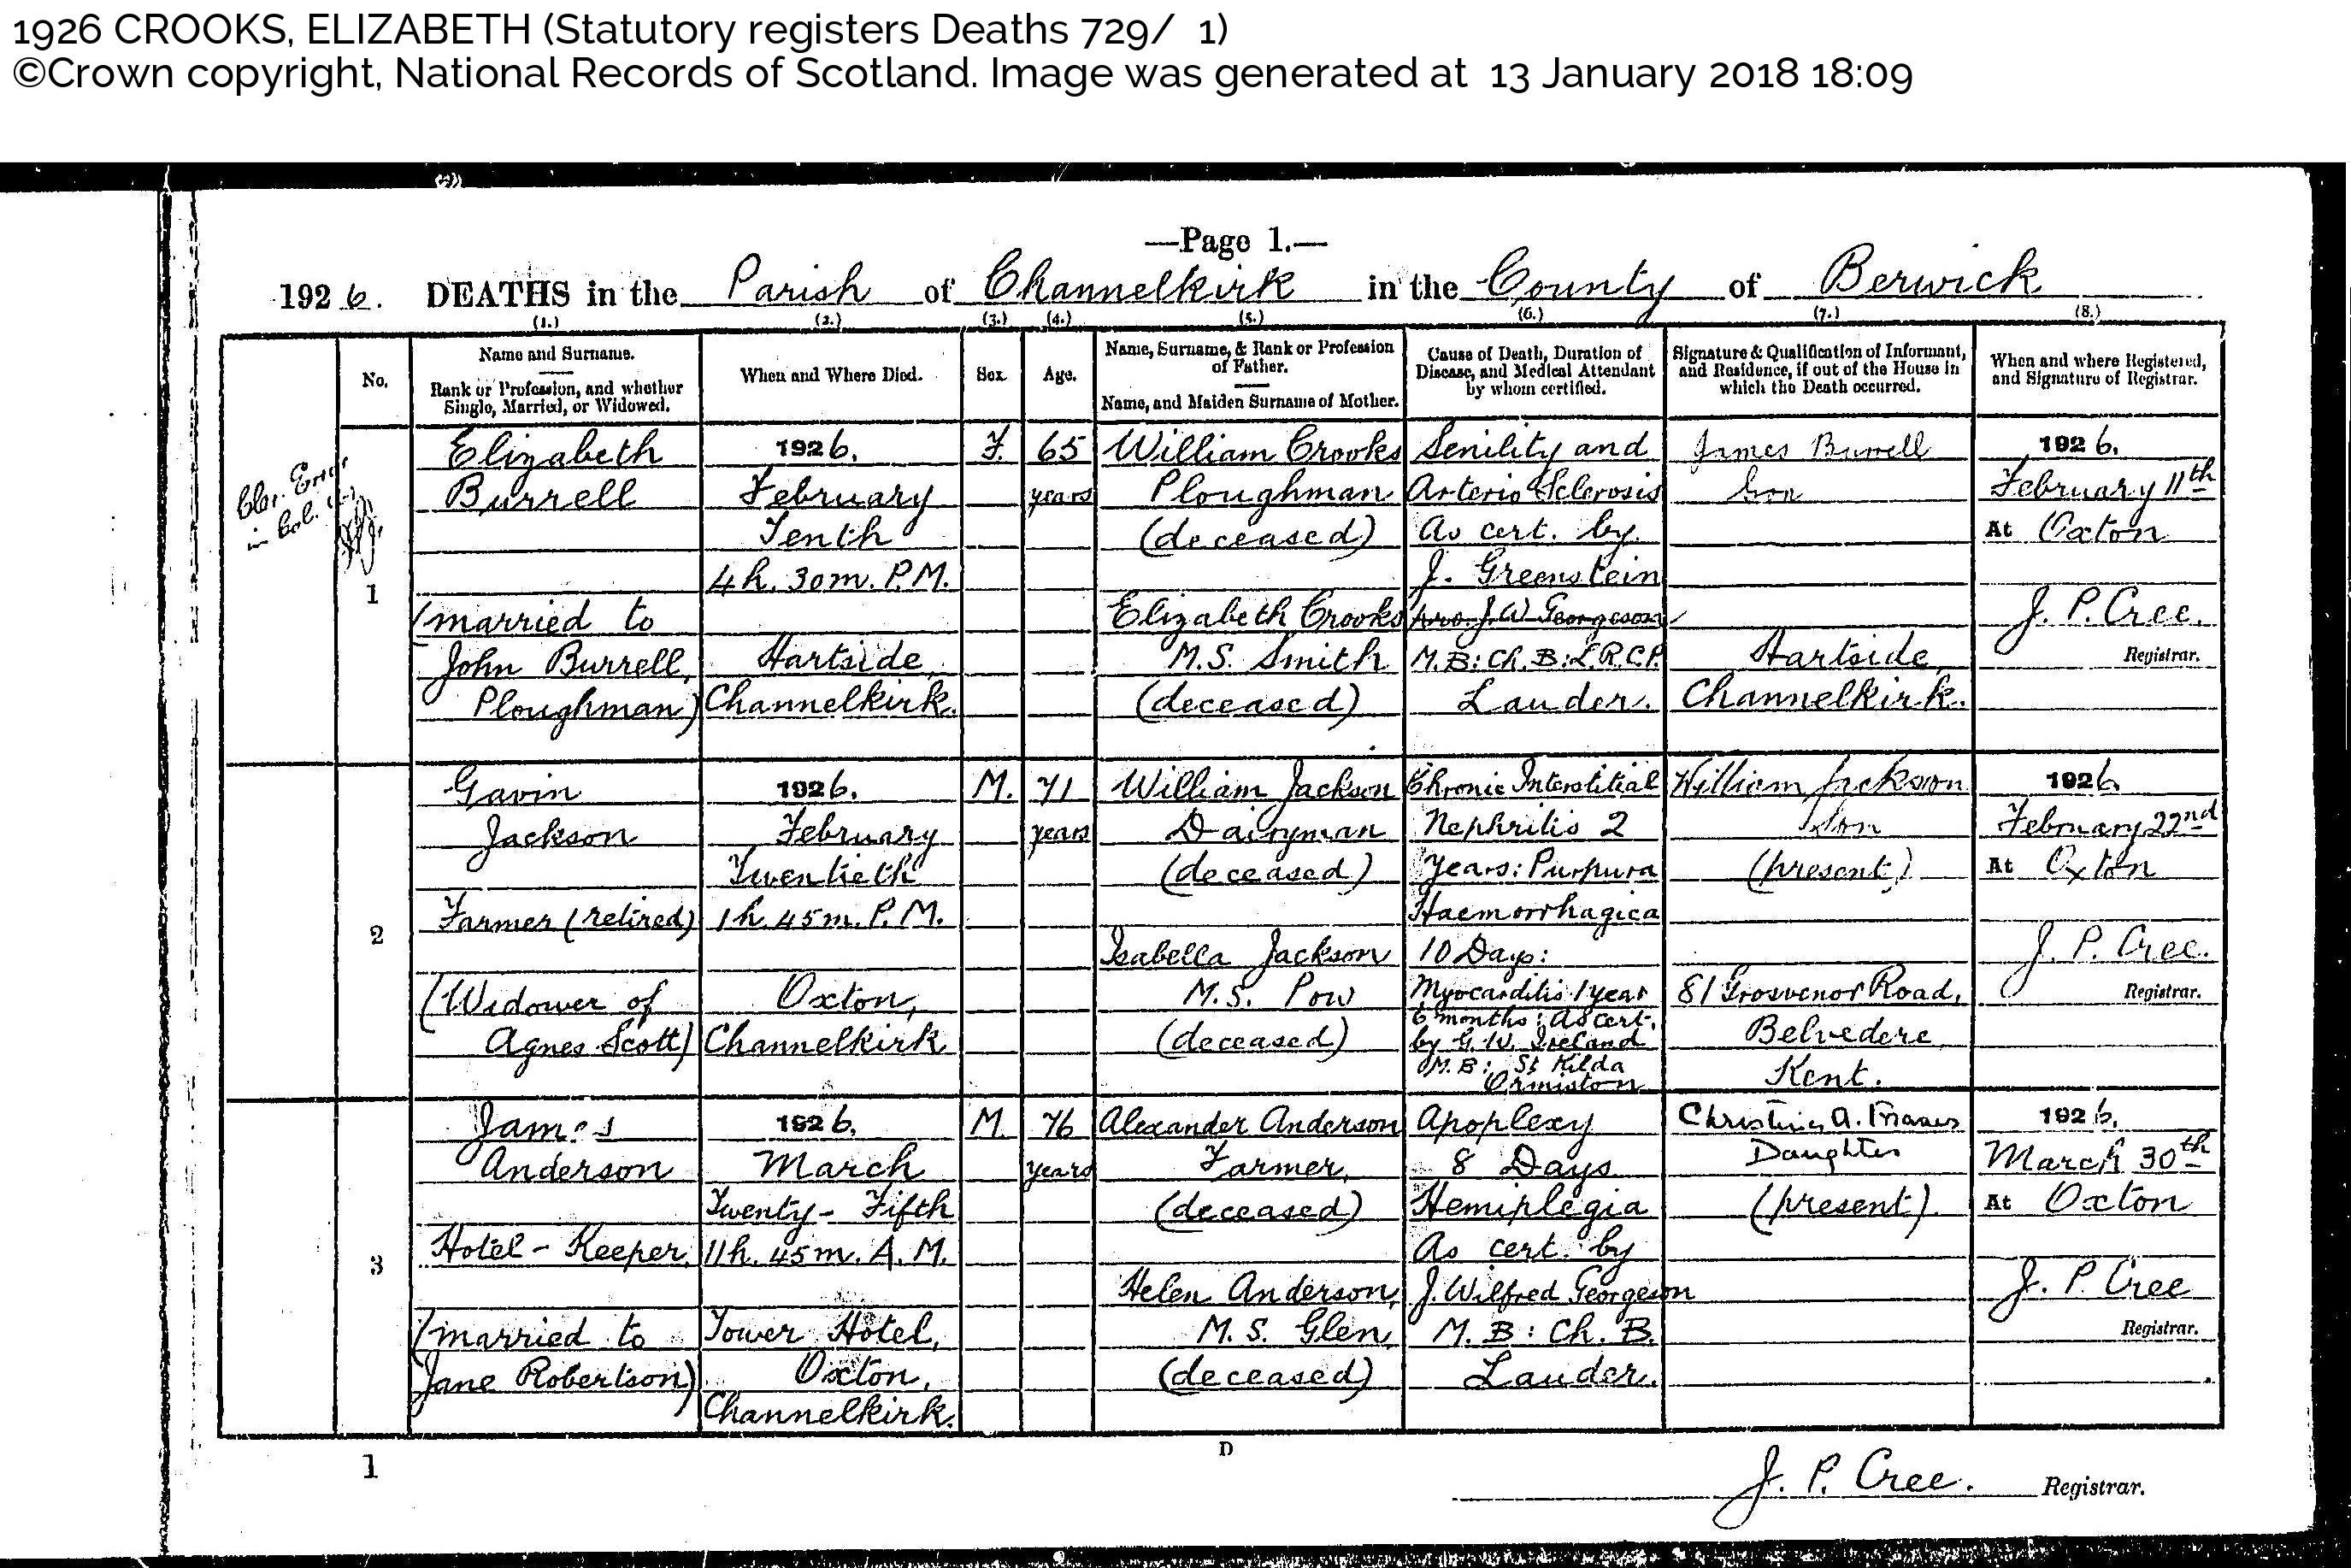 ElizabethCrooks(Burrell)_D1926 Channelkirk, February 10, 1926, Linked To: <a href='profiles/i489.html' >John Burrell 🧬</a> and <a href='profiles/i31.html' >Elizabeth Crooks</a>